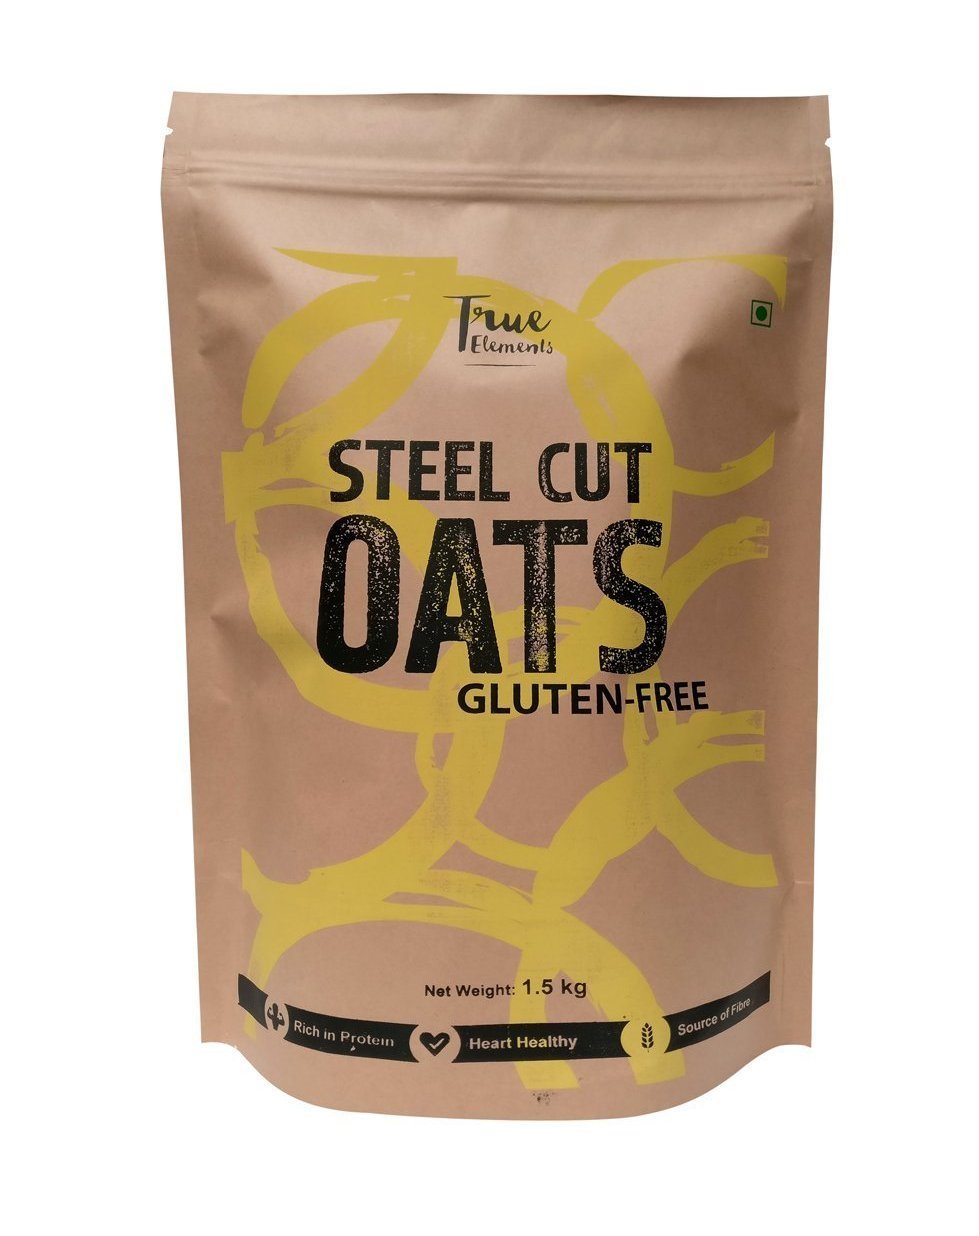 Amazon: Buy True Elements Gluten Free Steel Cut Oats, 1.5kg at Rs 350 only